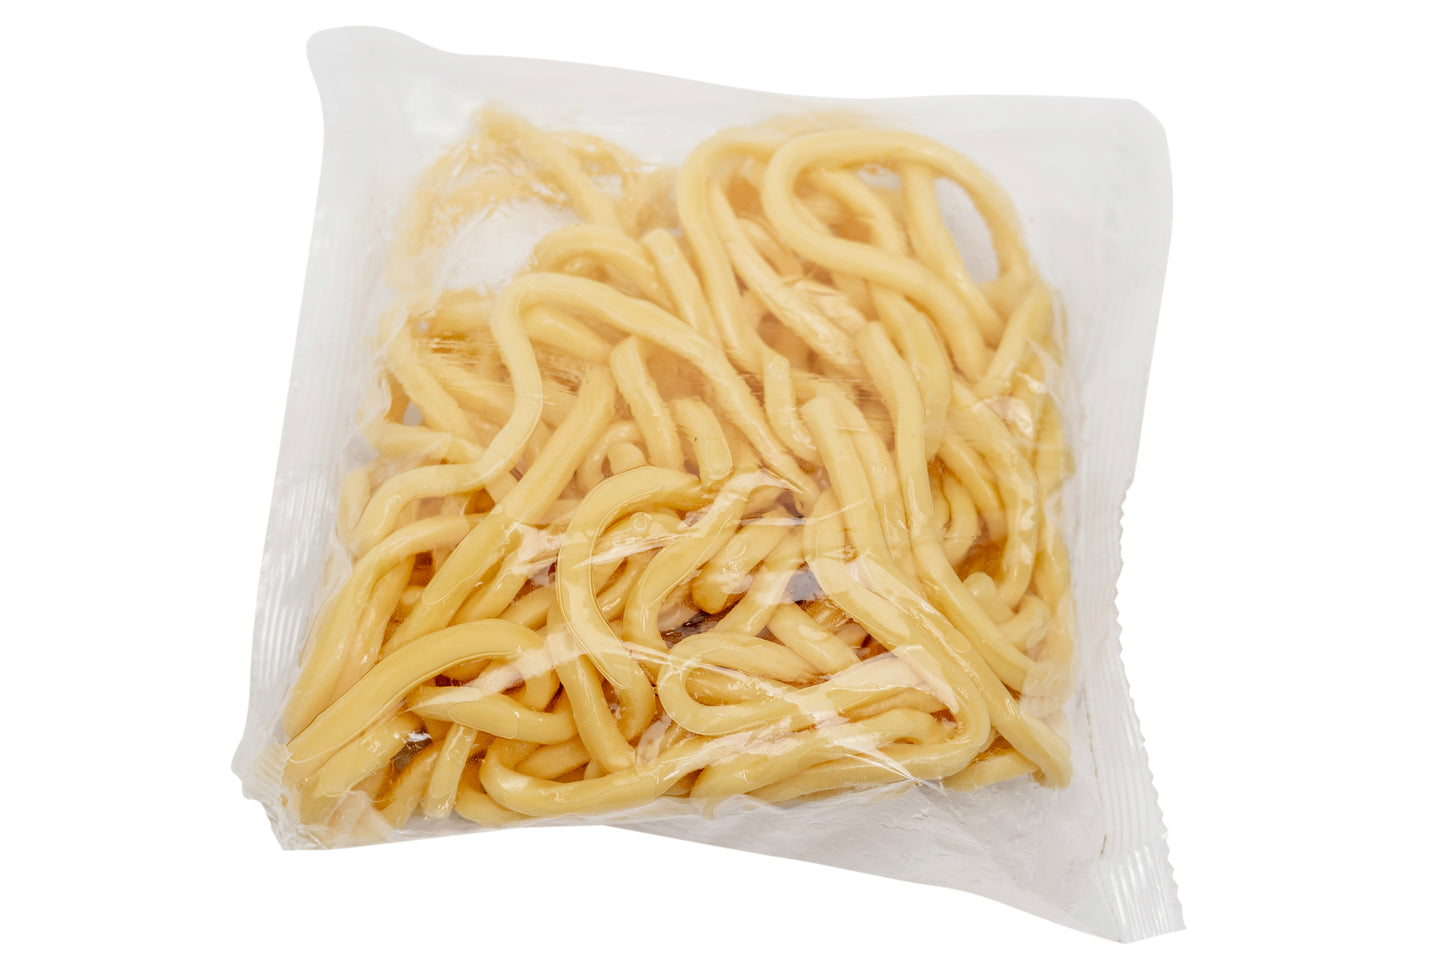 Stir Fry Yellow Noodle